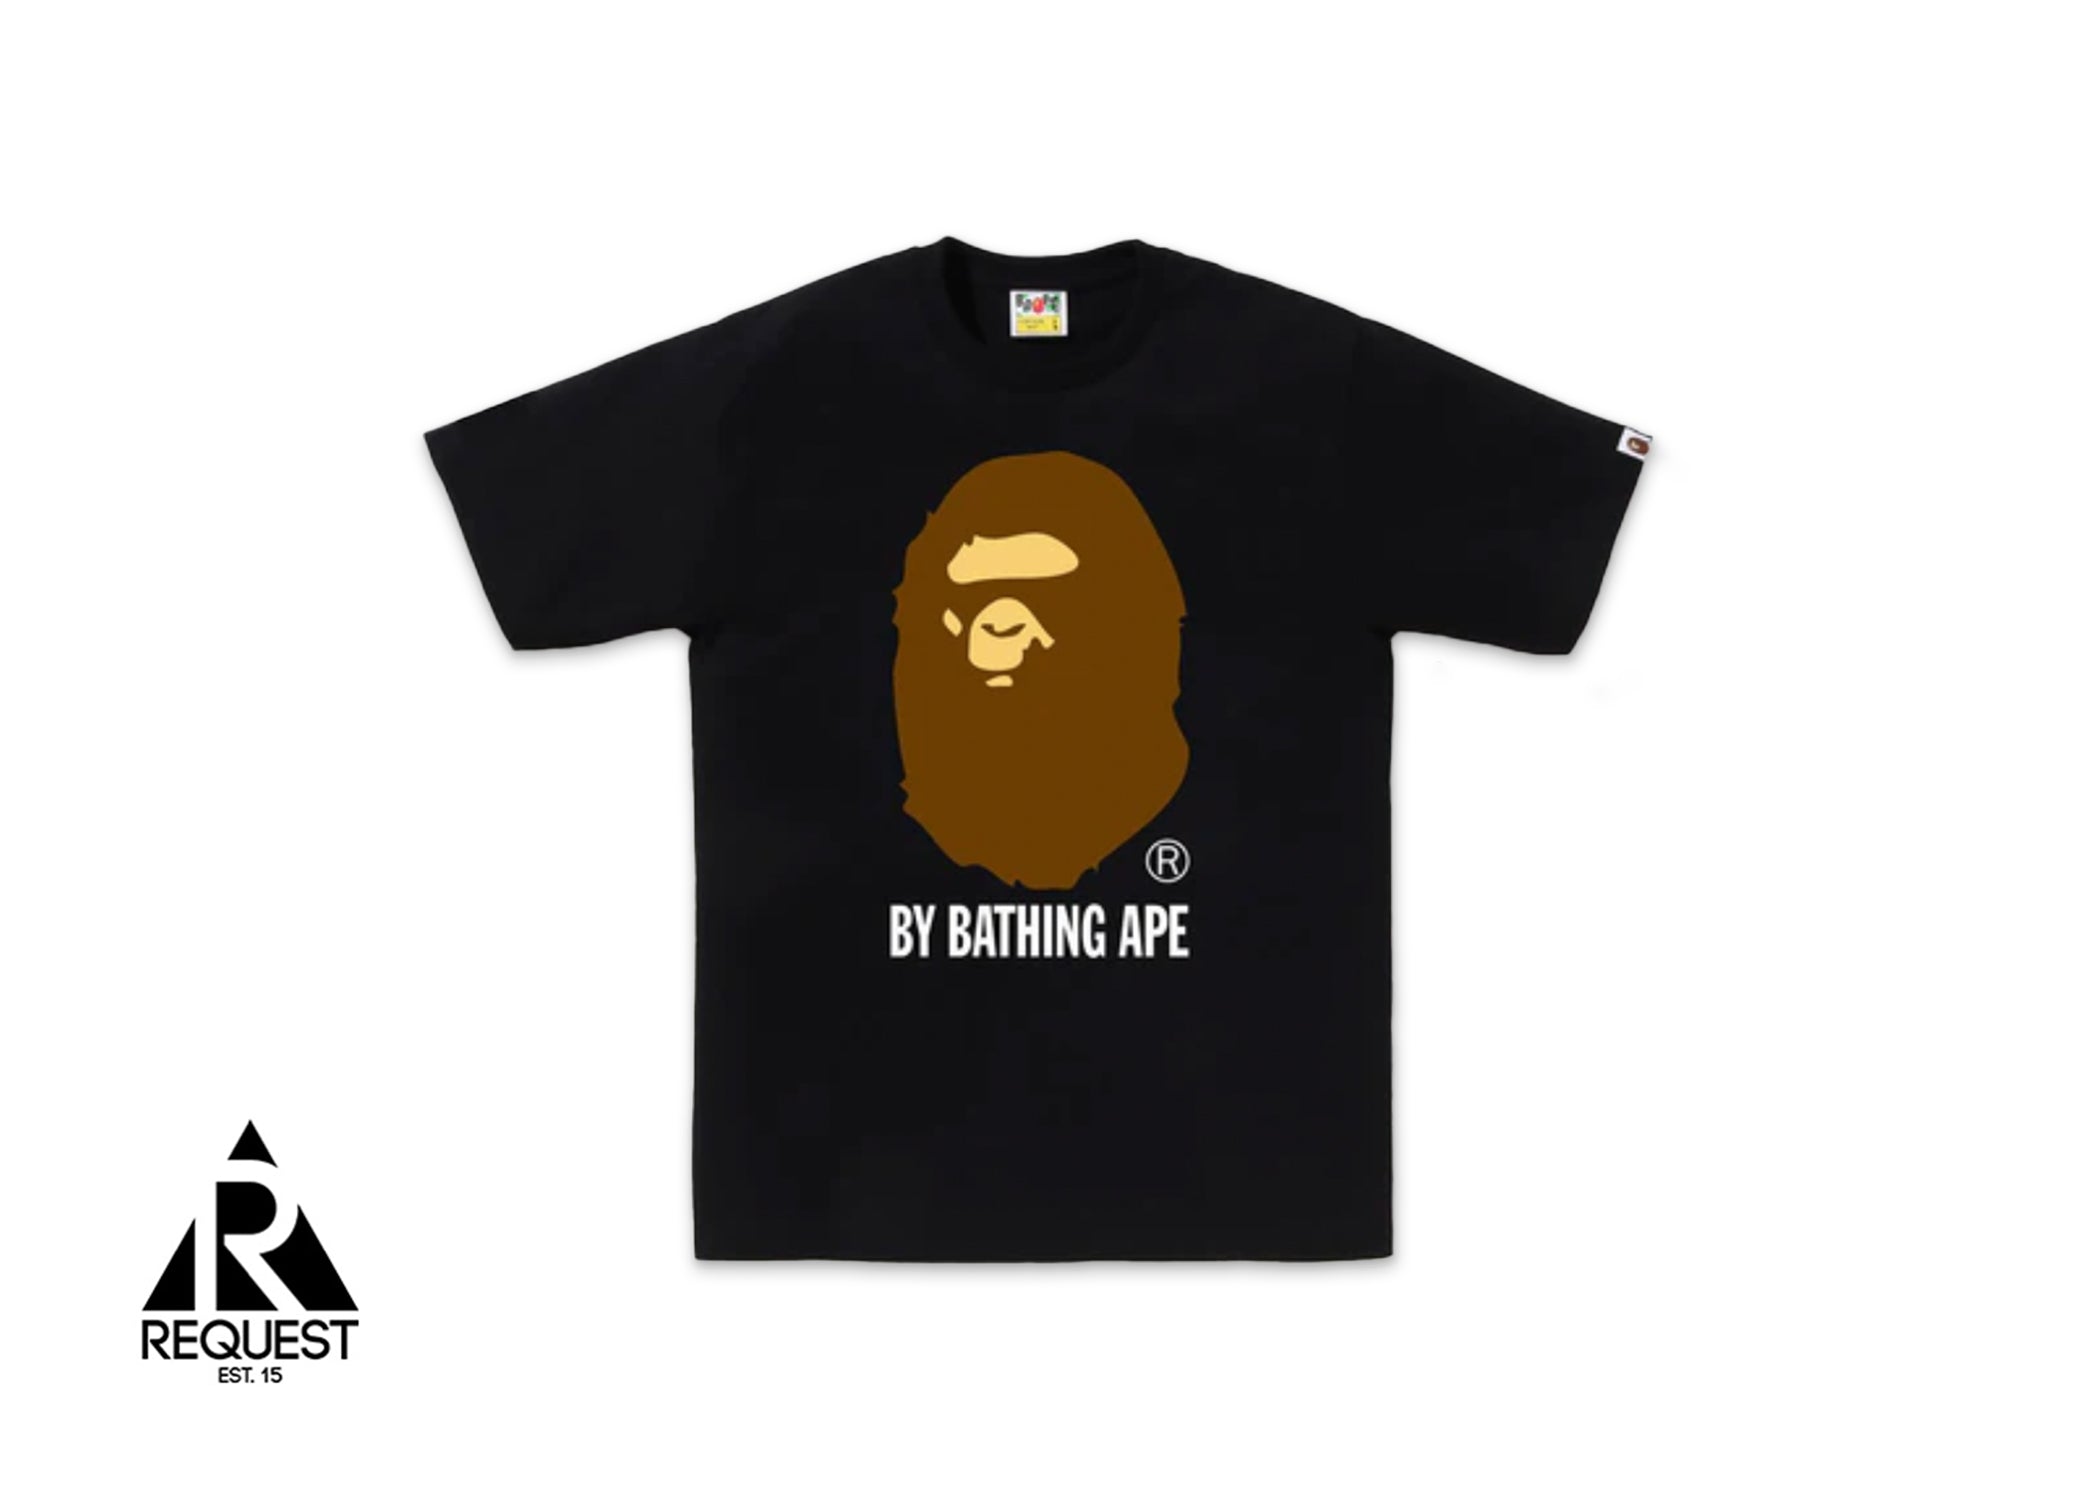 A Bathing Ape By Bathing Ape Tee "Black"